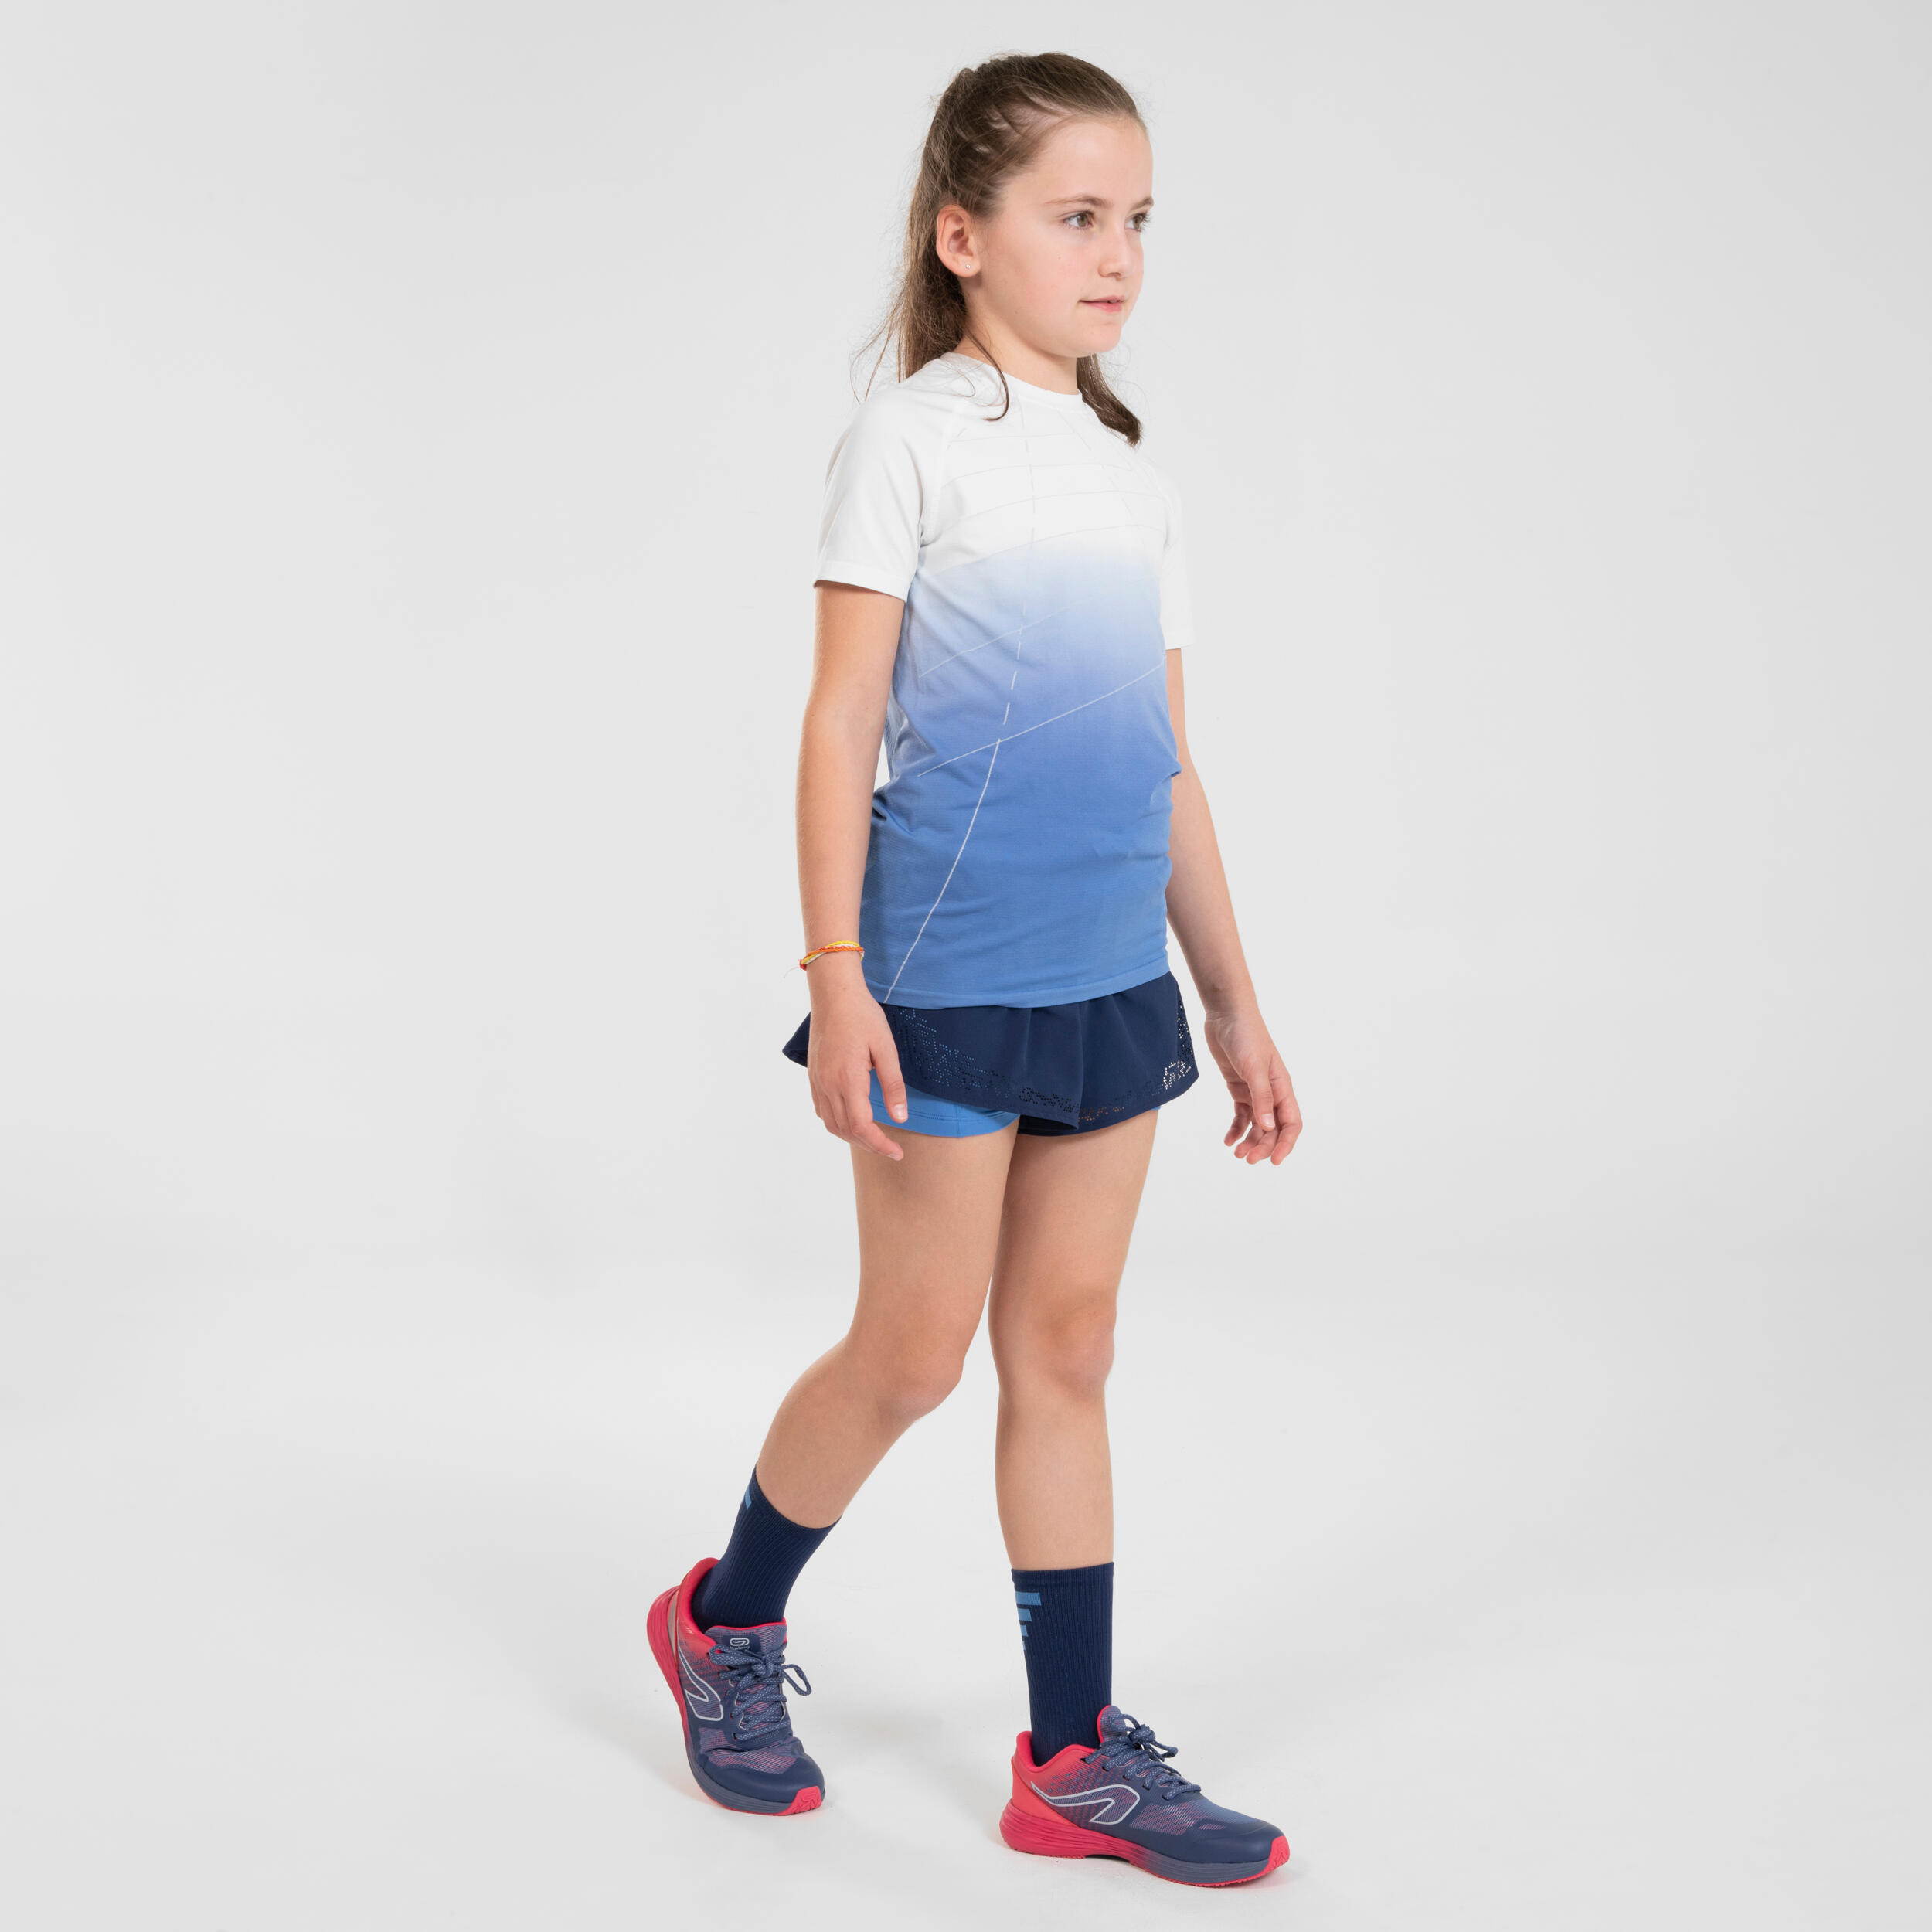 KIPRUN DRY+ Girls' 2-in-1 Running Tight Shorts - navy and blue 15/16